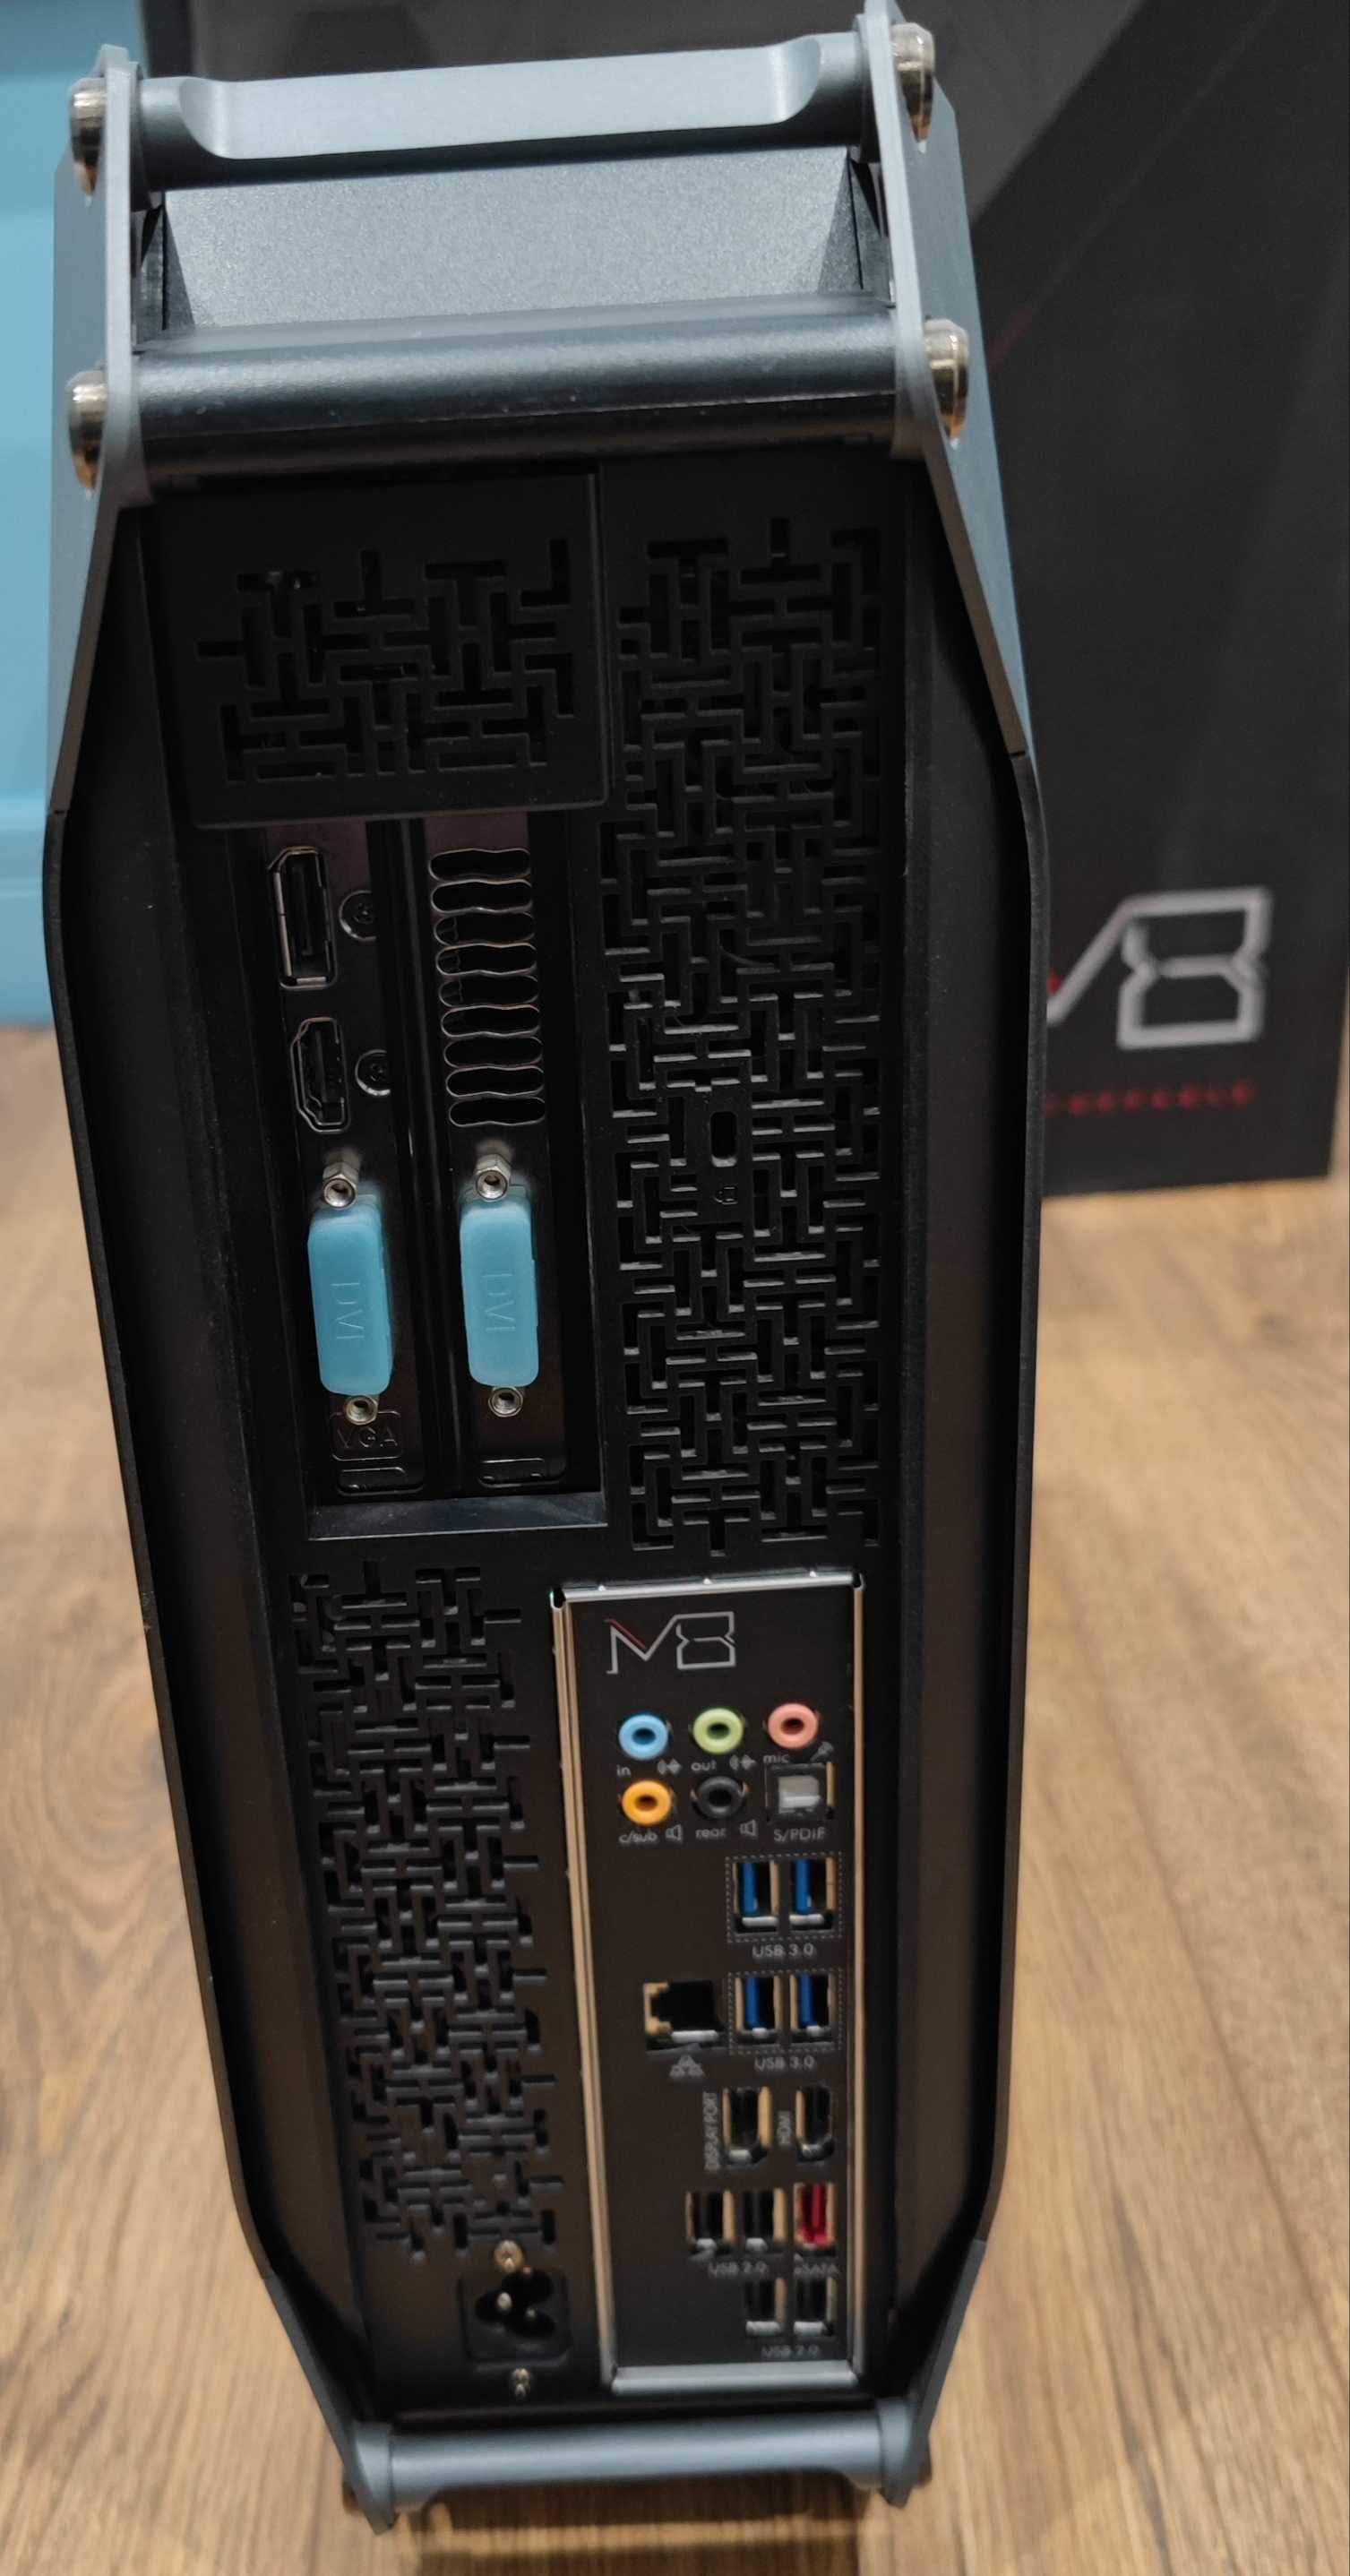 Системный блок ASRock M8 Z87 Mini-ITX Barebones Gaming PC